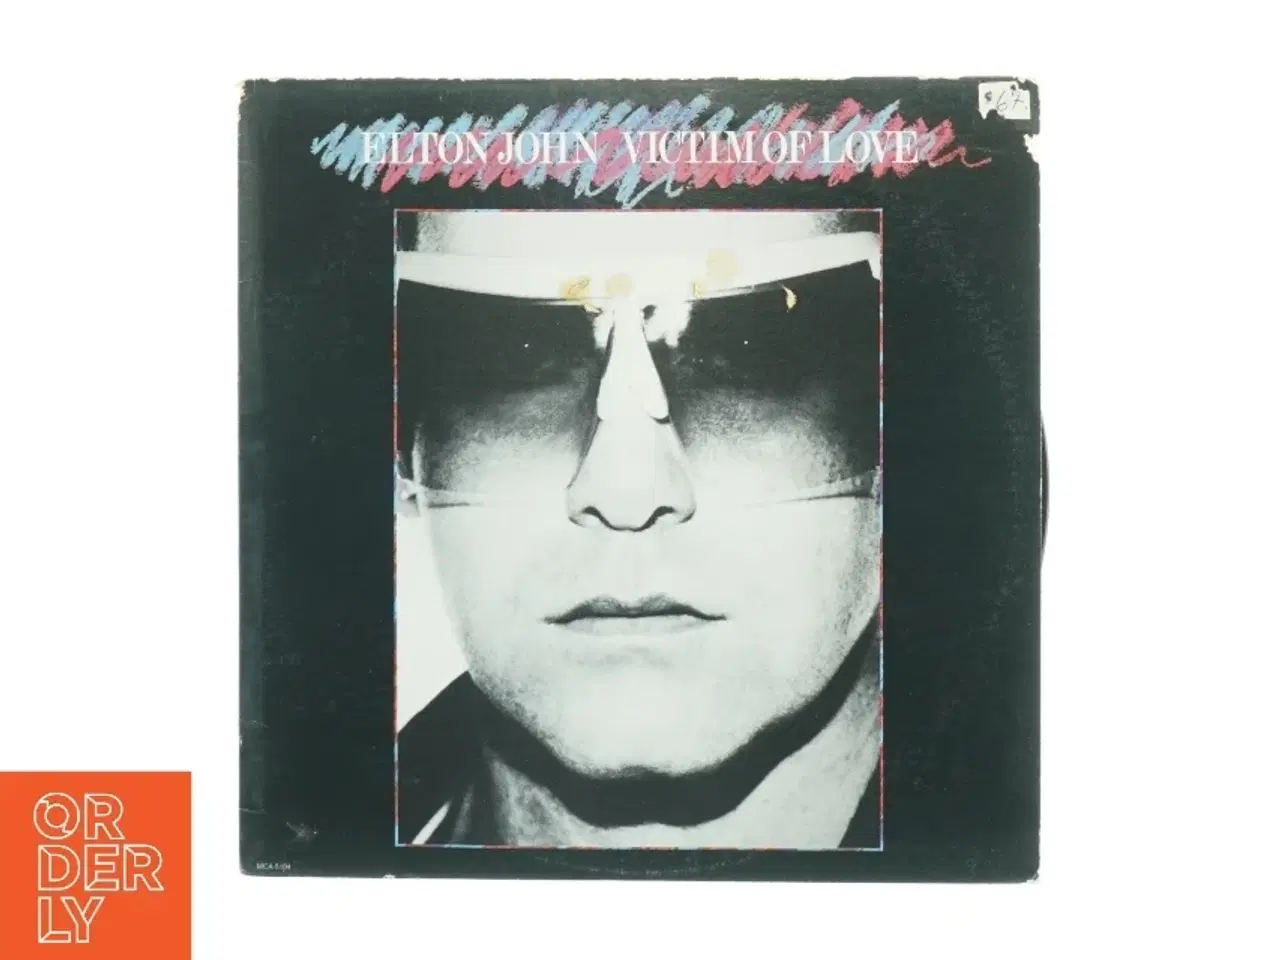 Billede 1 - Elton John 'Victim of Love' Vinyl LP fra MCA Records (str. 31 x 31 cm)